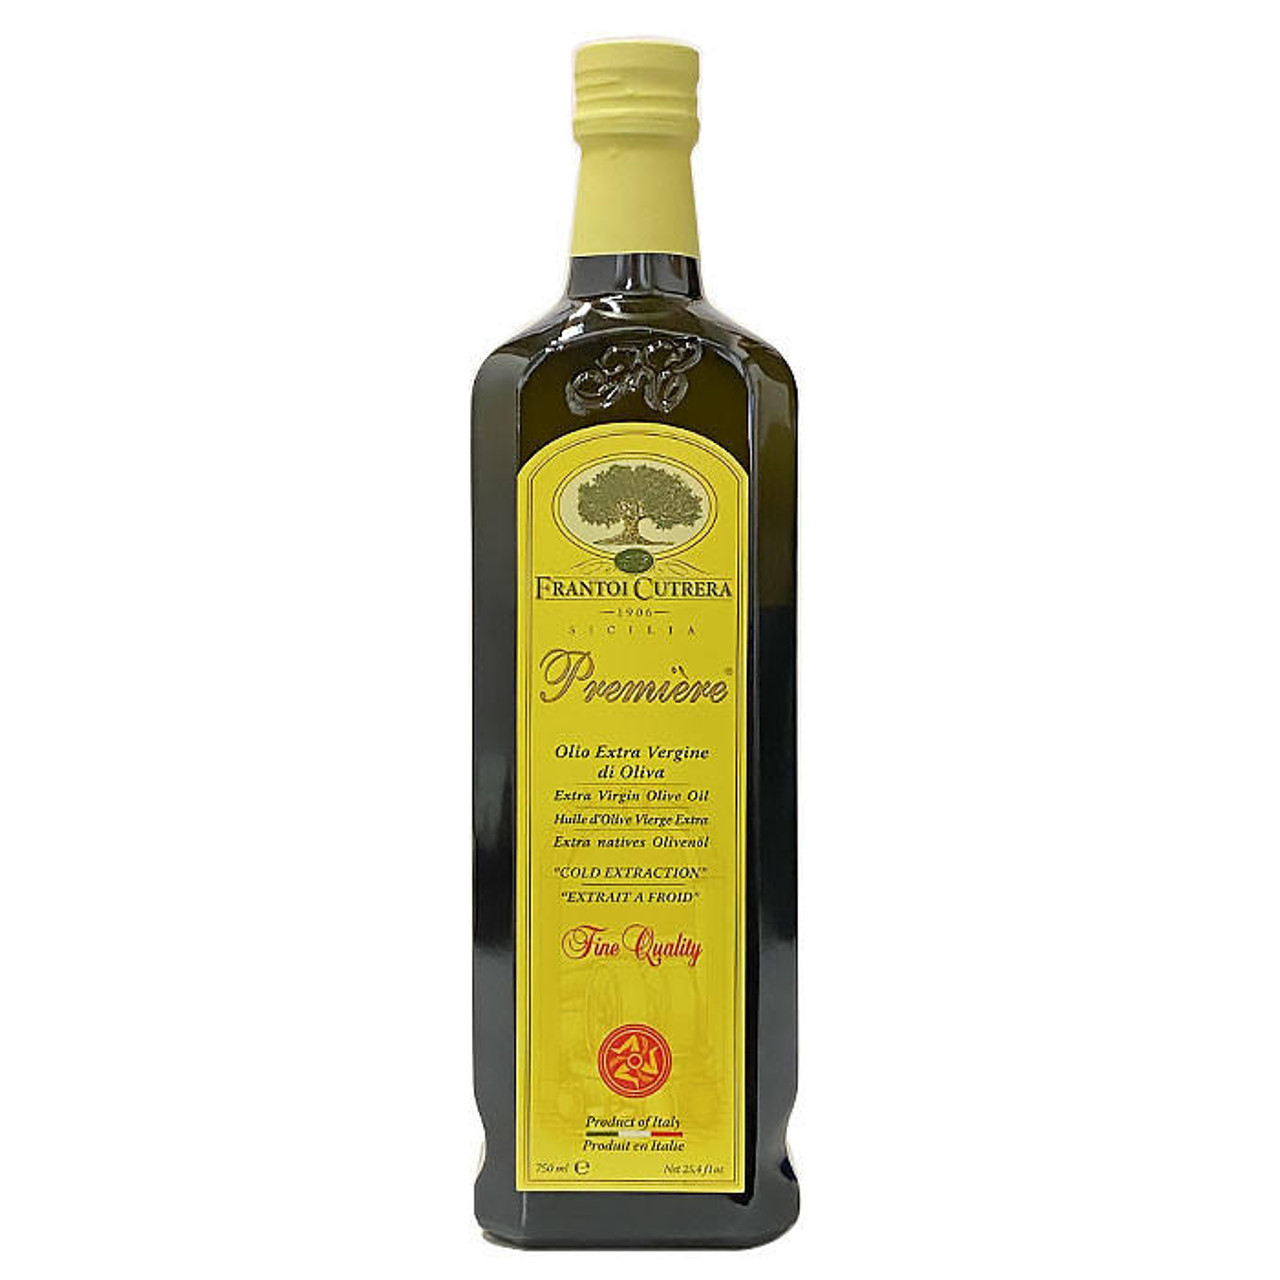 14876-frantoi-cutrera-premiere-fine-quality-extra-virgin-olive-oil-750ml__94979.1695496741.jpg